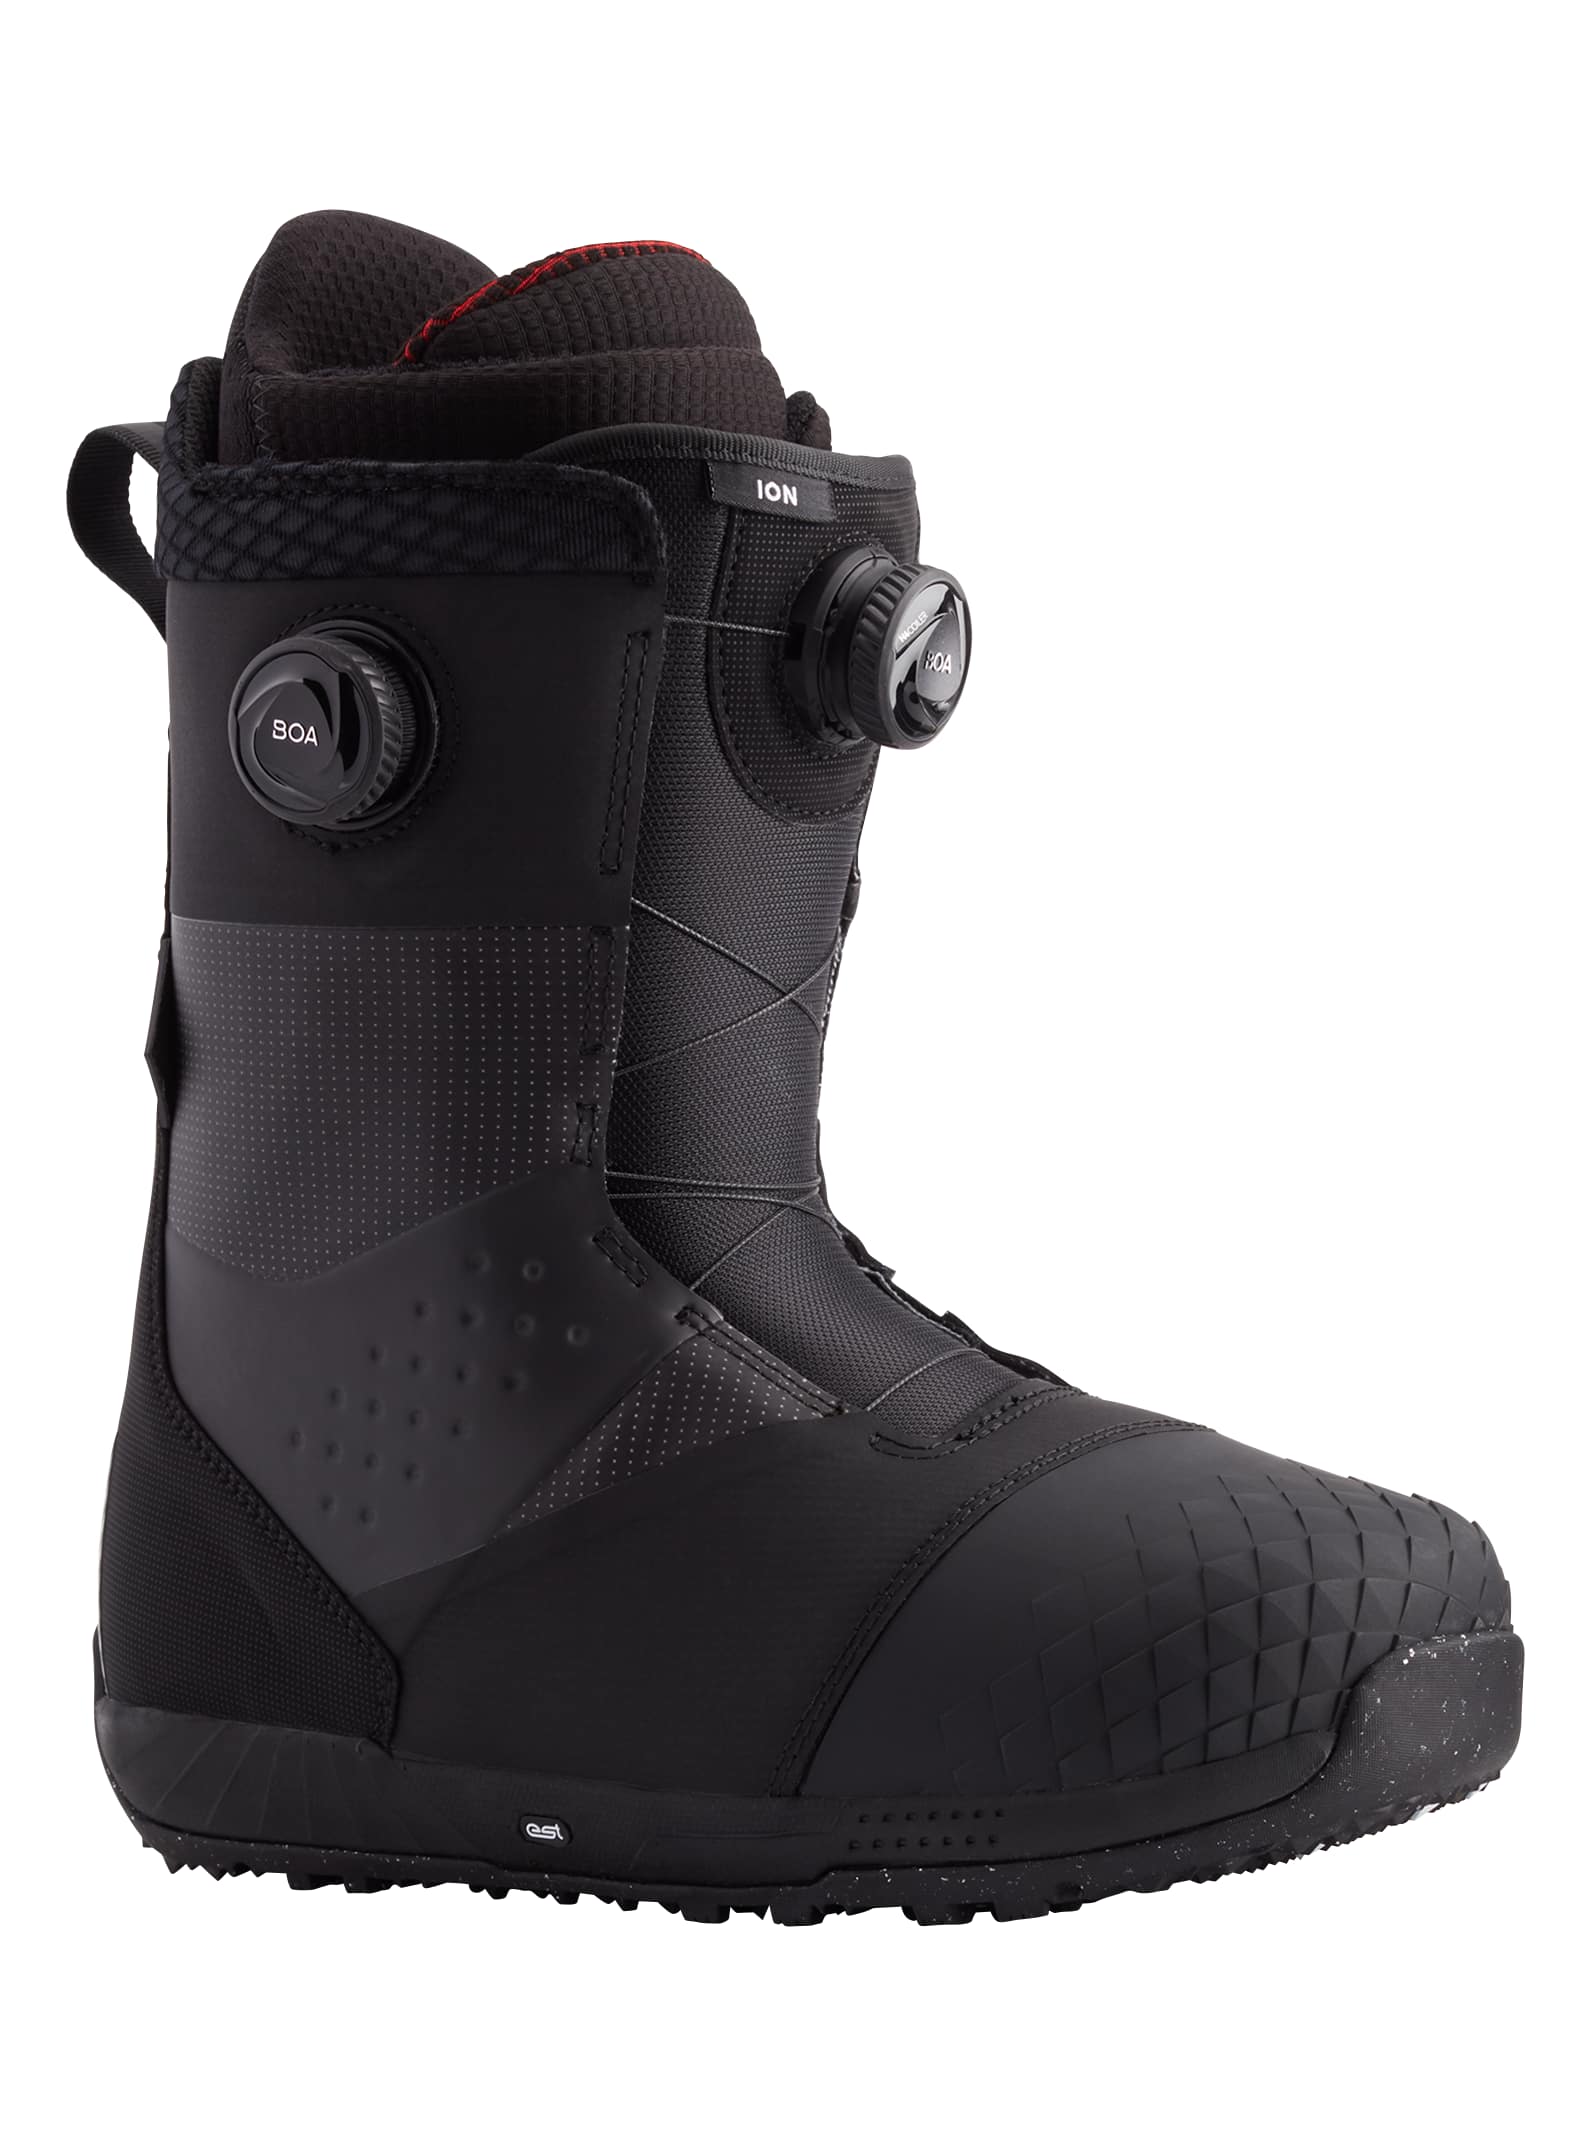 Burton - Boots de snowboard Ion BOA® homme, Black, 8.5